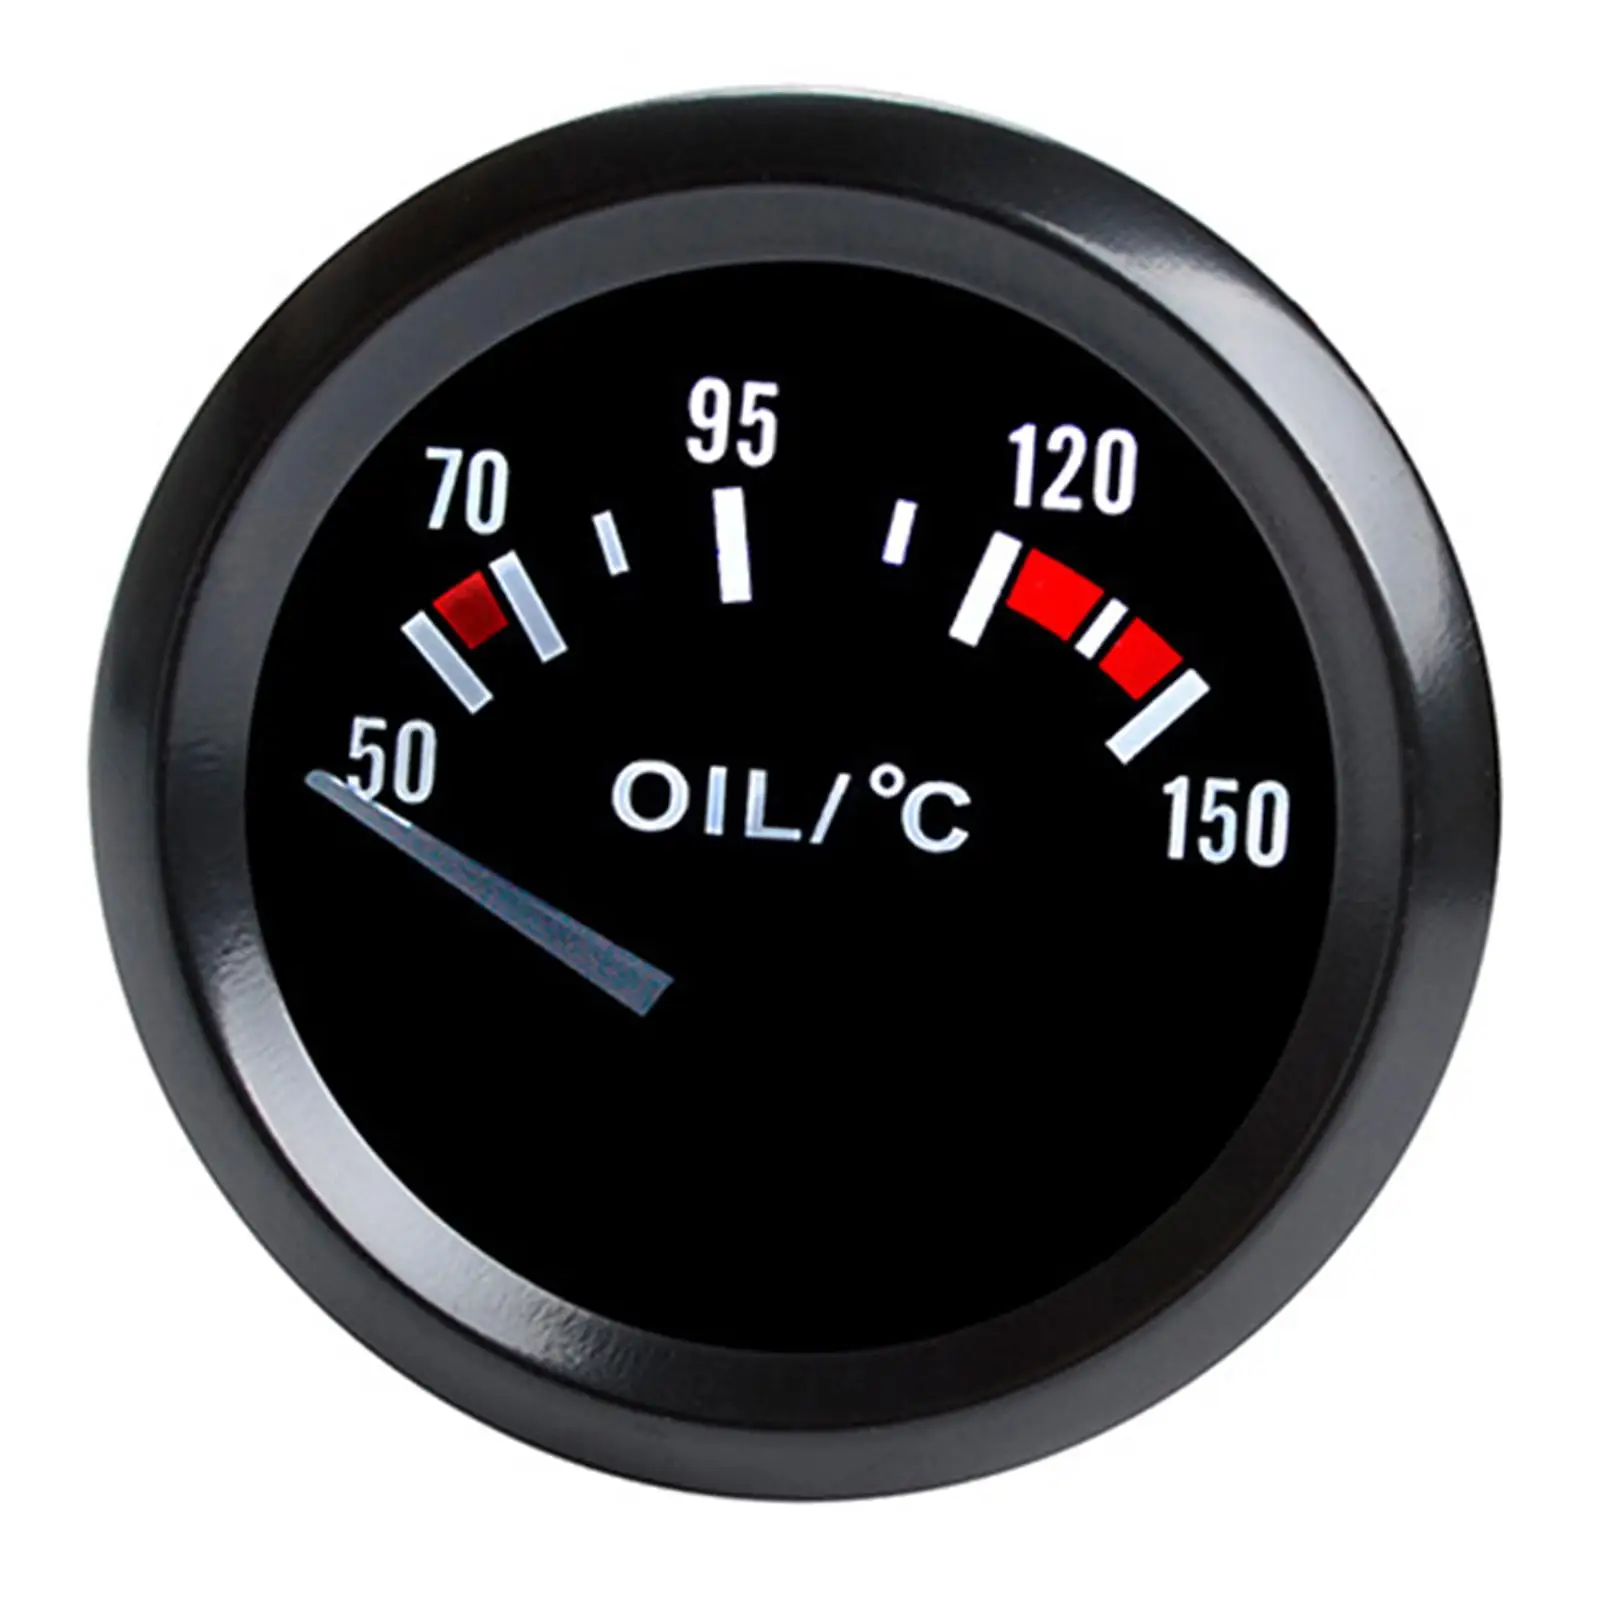 Oil Temp Gauge Spare Parts Oil Temperature Gauge for Car Vehicle Truck